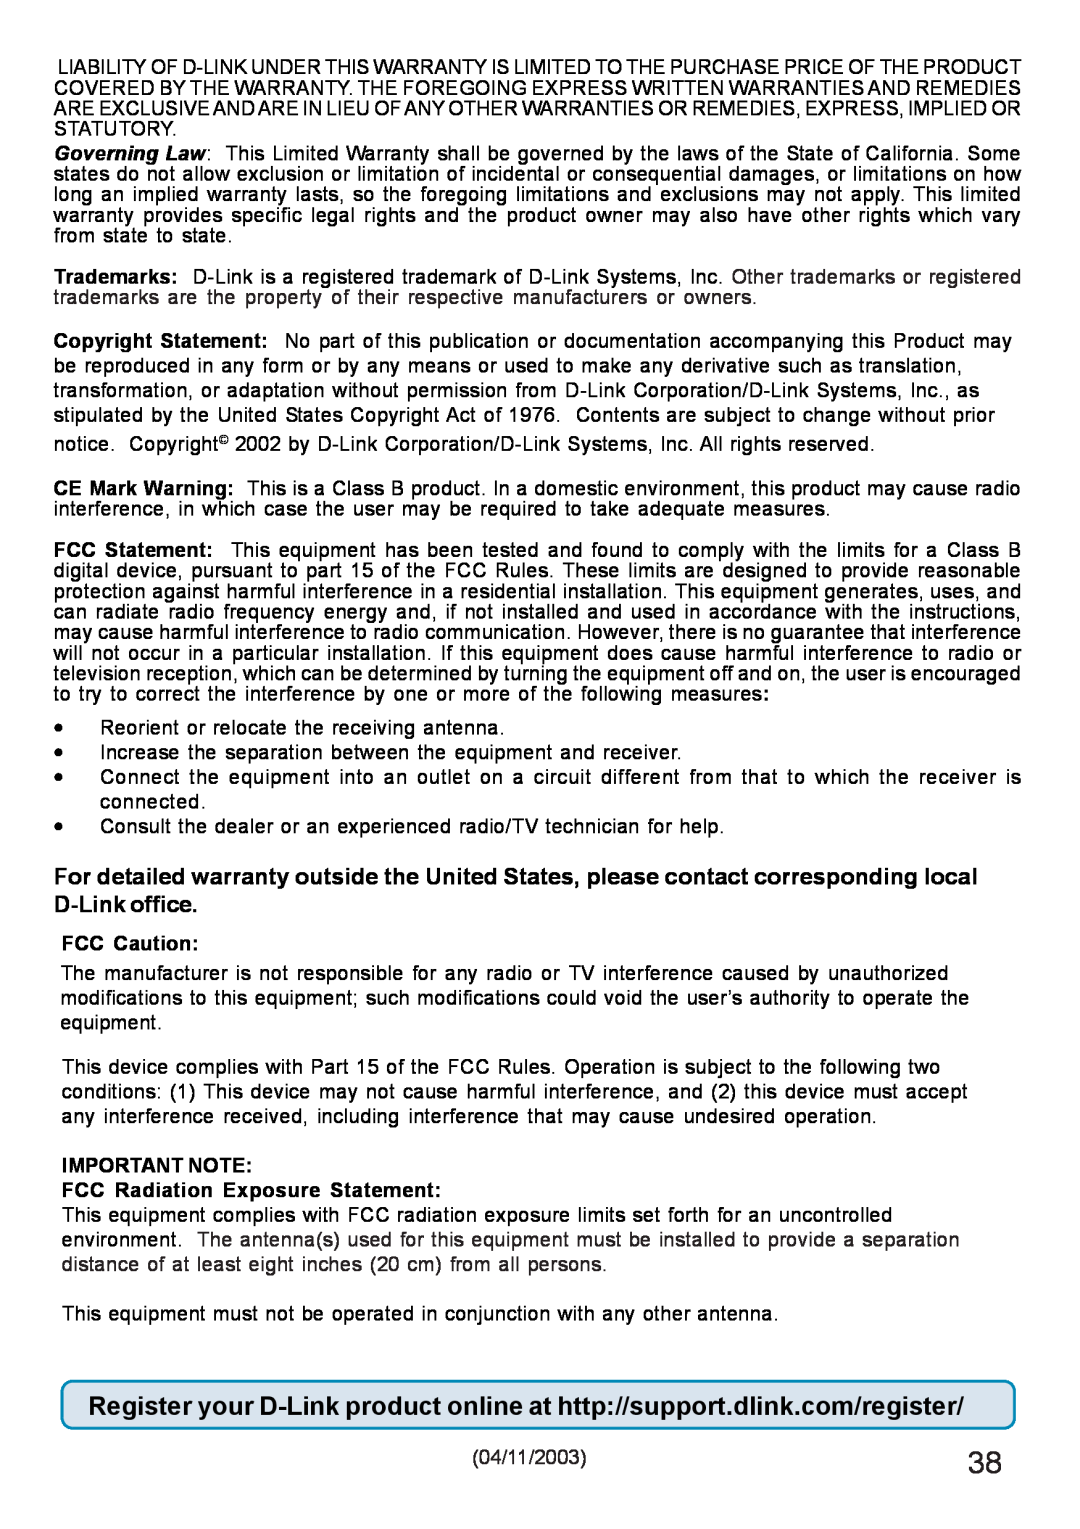 D-Link DWL-120+ manual FCC Caution, IMPORTANT NOTE FCC Radiation Exposure Statement 